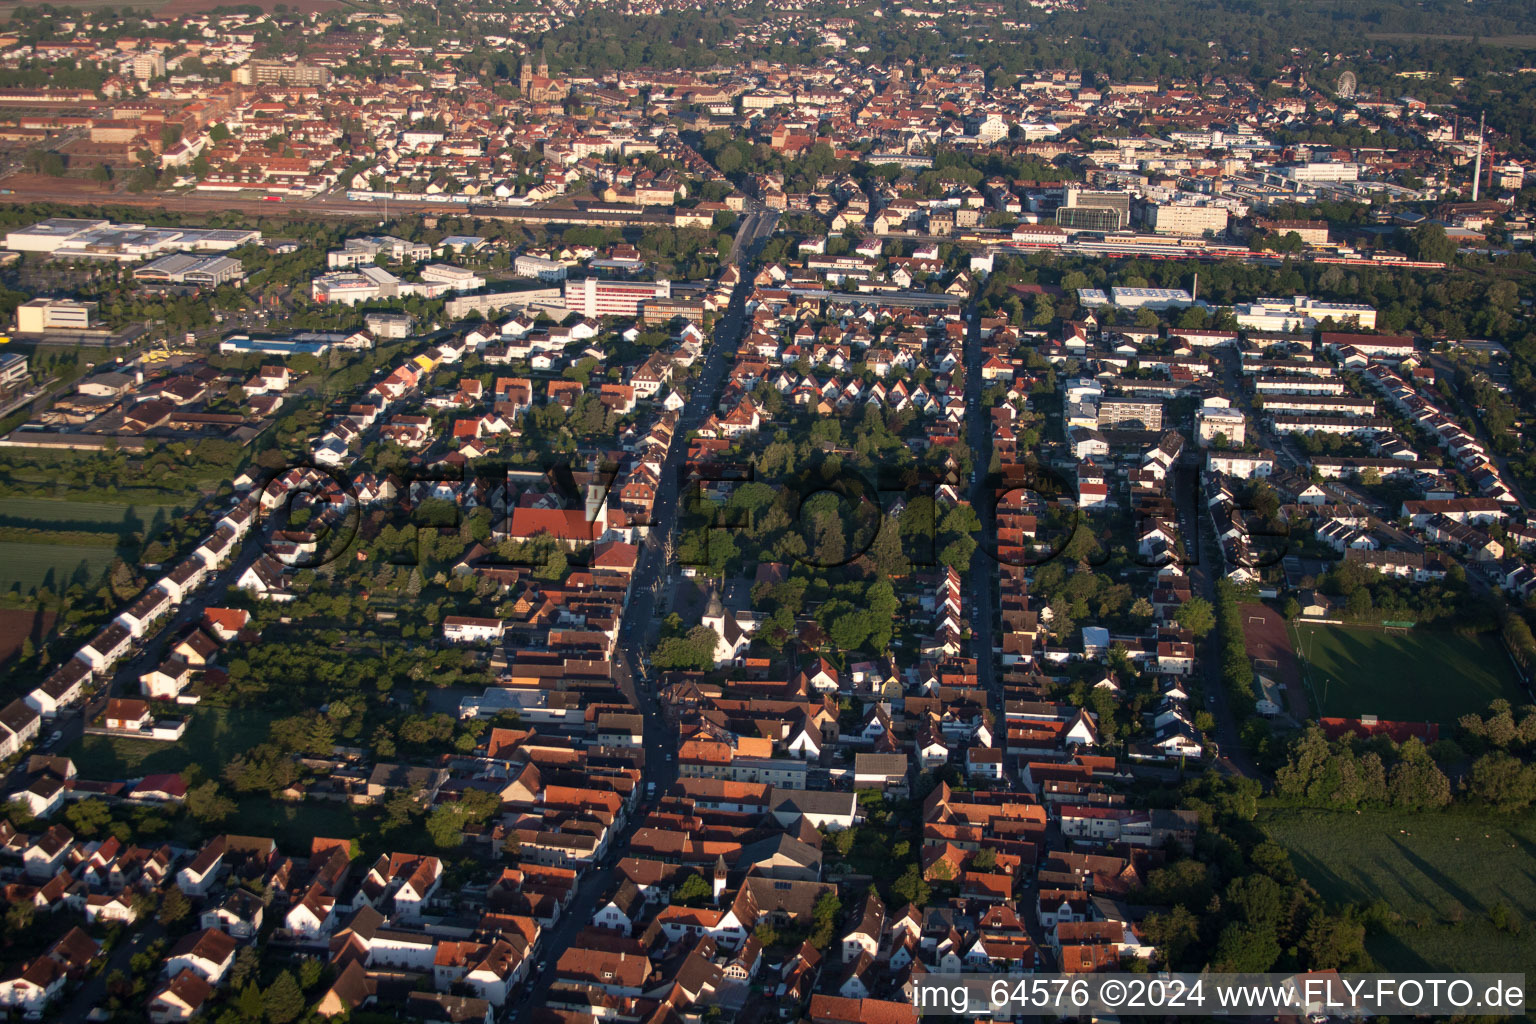 District Queichheim in Landau in der Pfalz in the state Rhineland-Palatinate, Germany seen from above